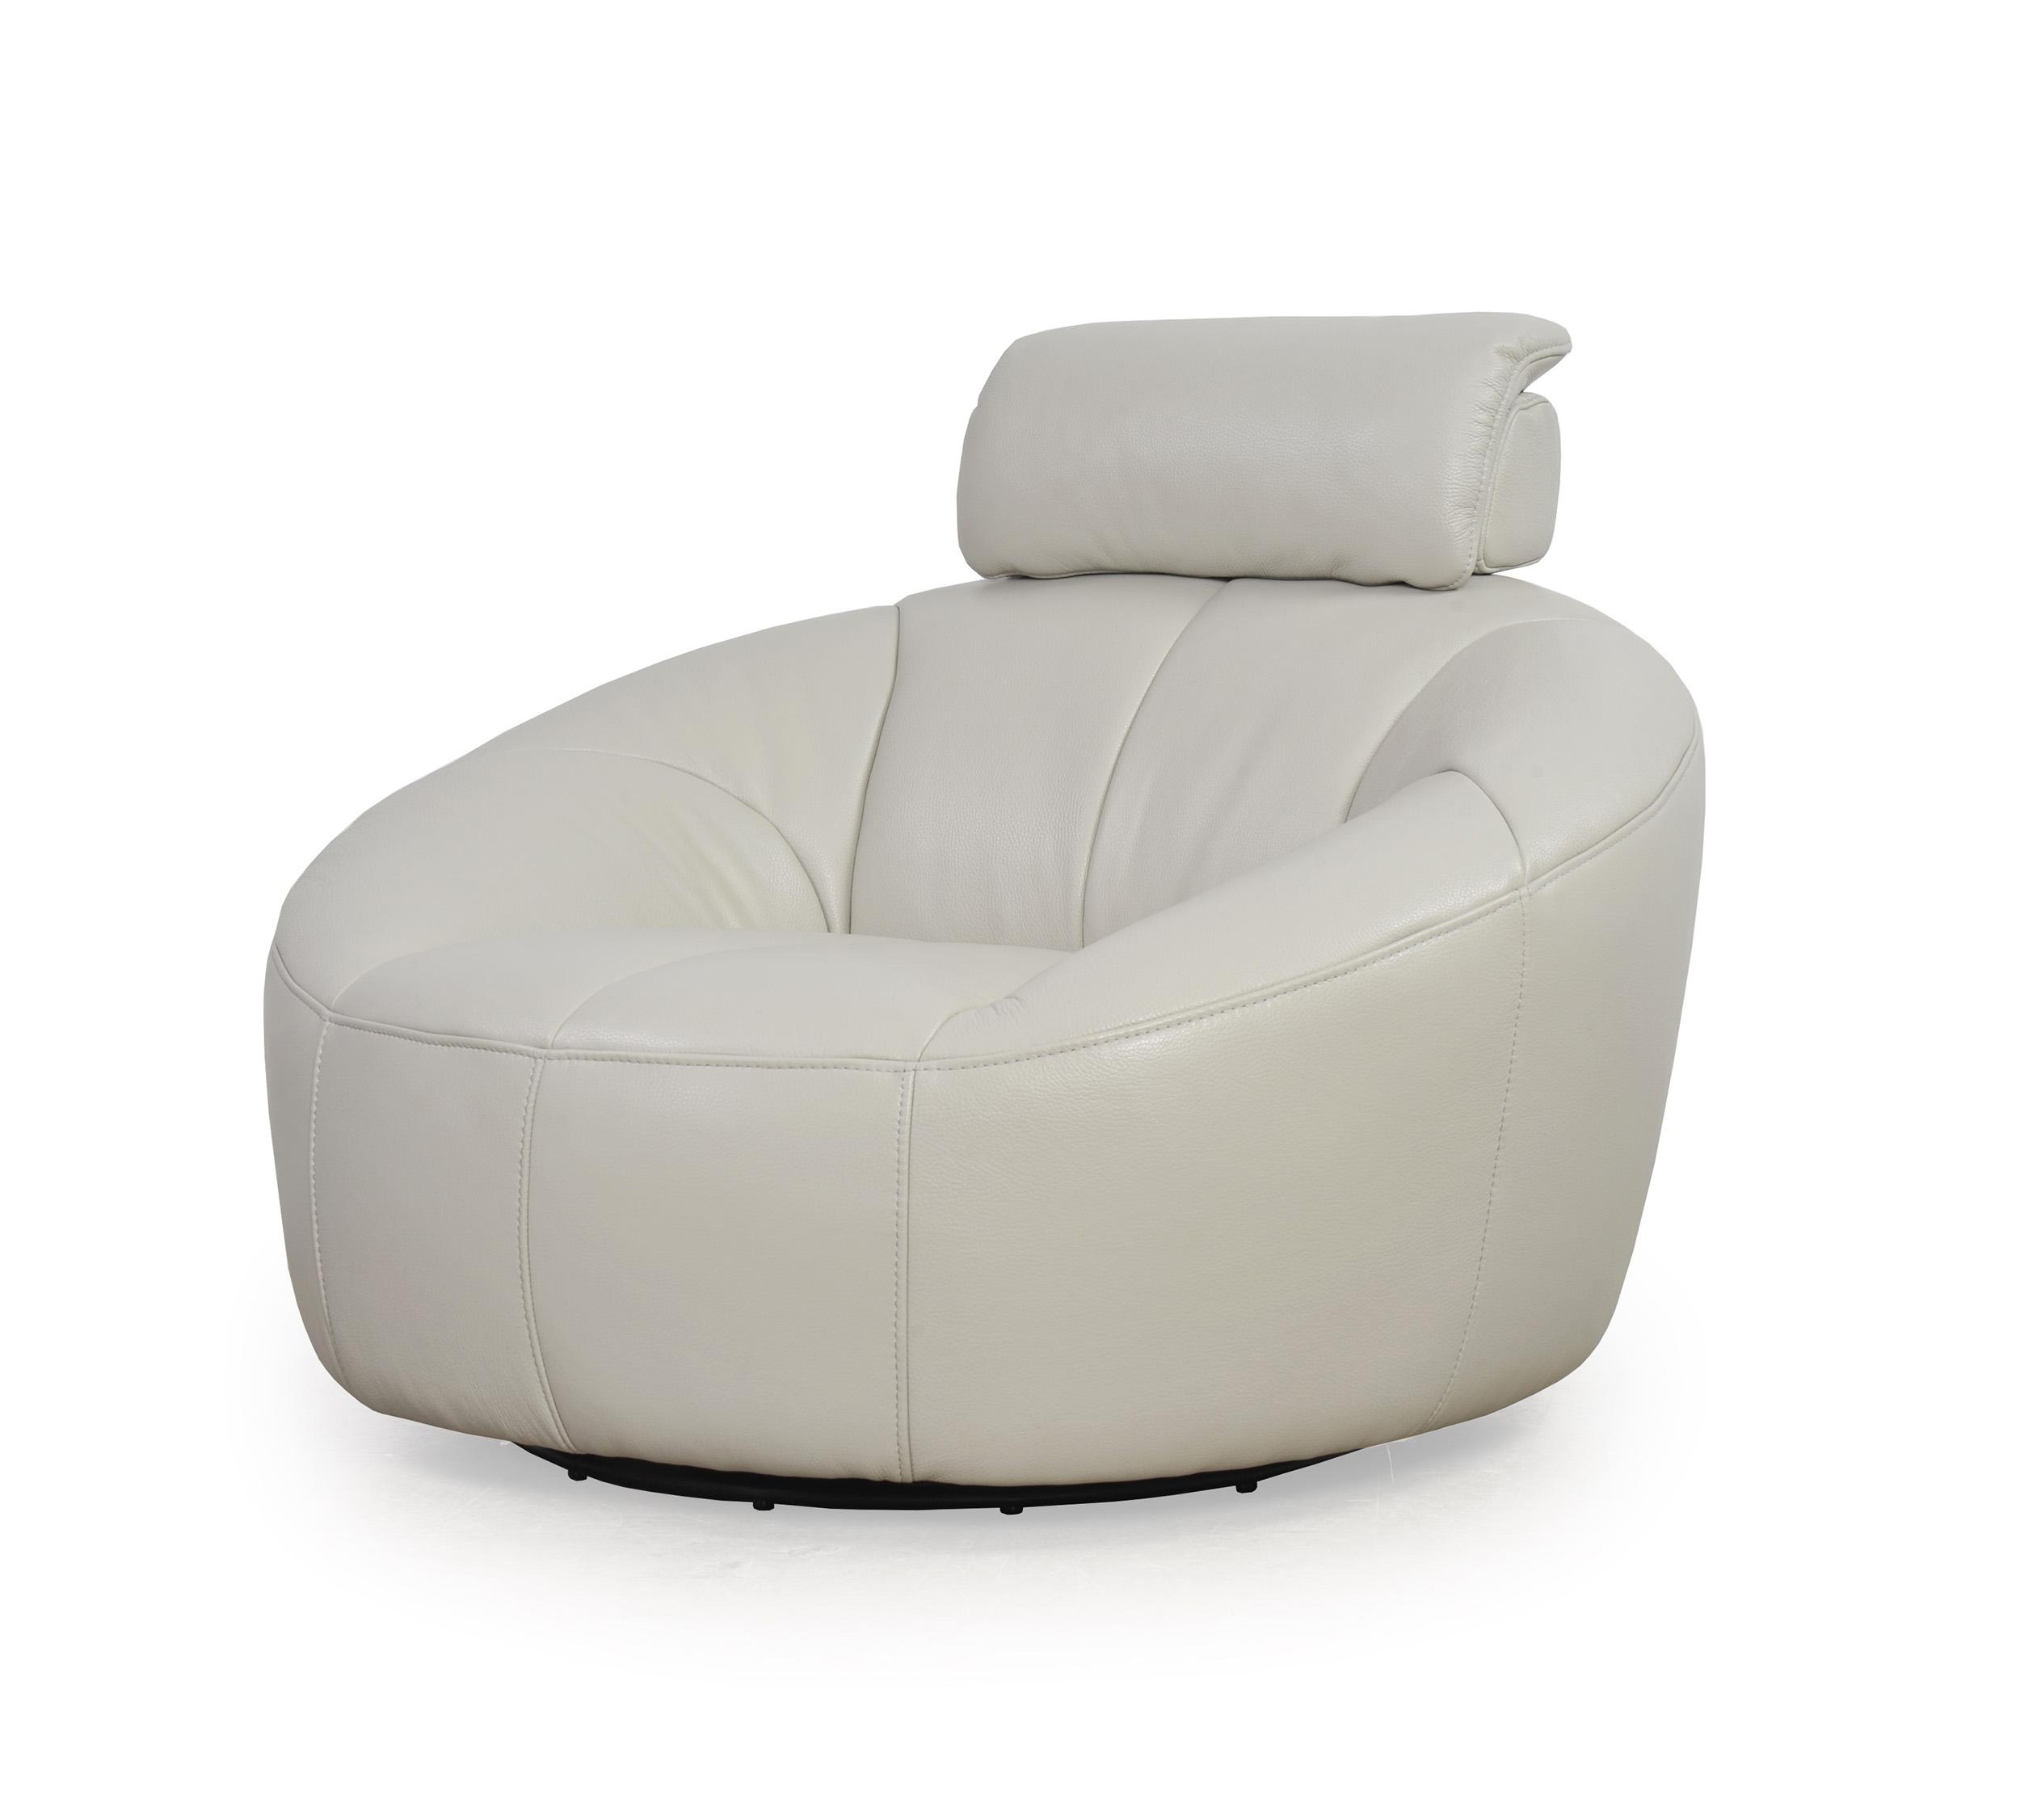 Contemporary Arm Chairs 292 - Casper 29206B1383 in Light Gray Top grain leather